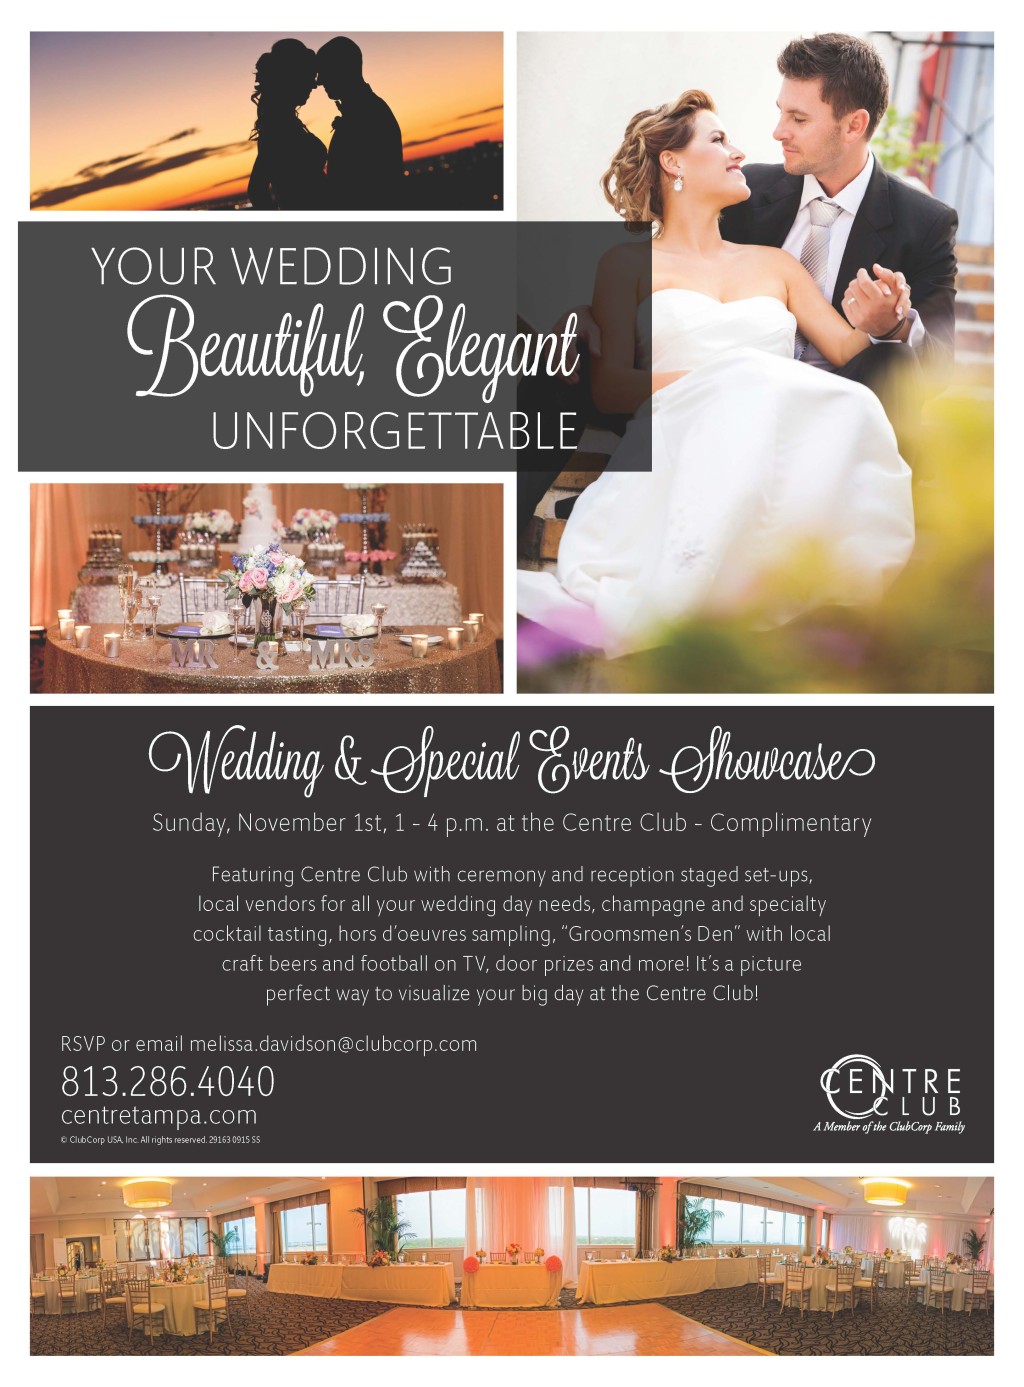 Centre Club Wedding and Special Event Showcase | Tampa Bridal Show, Sunday, November 1, 2015